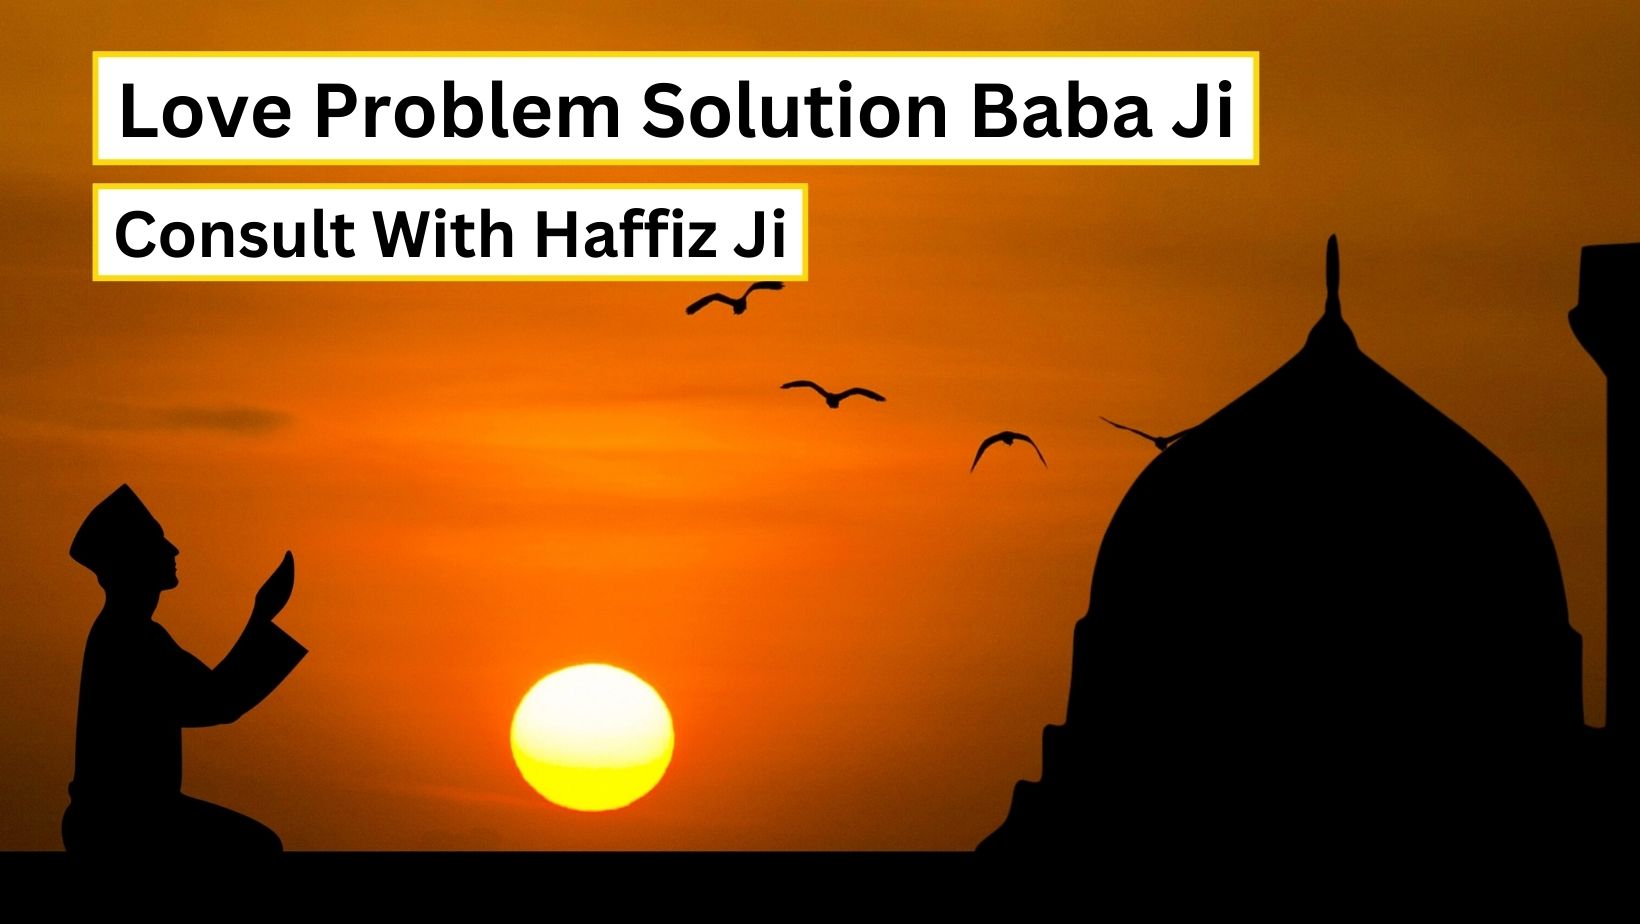 Love Problem Solution Baba ji